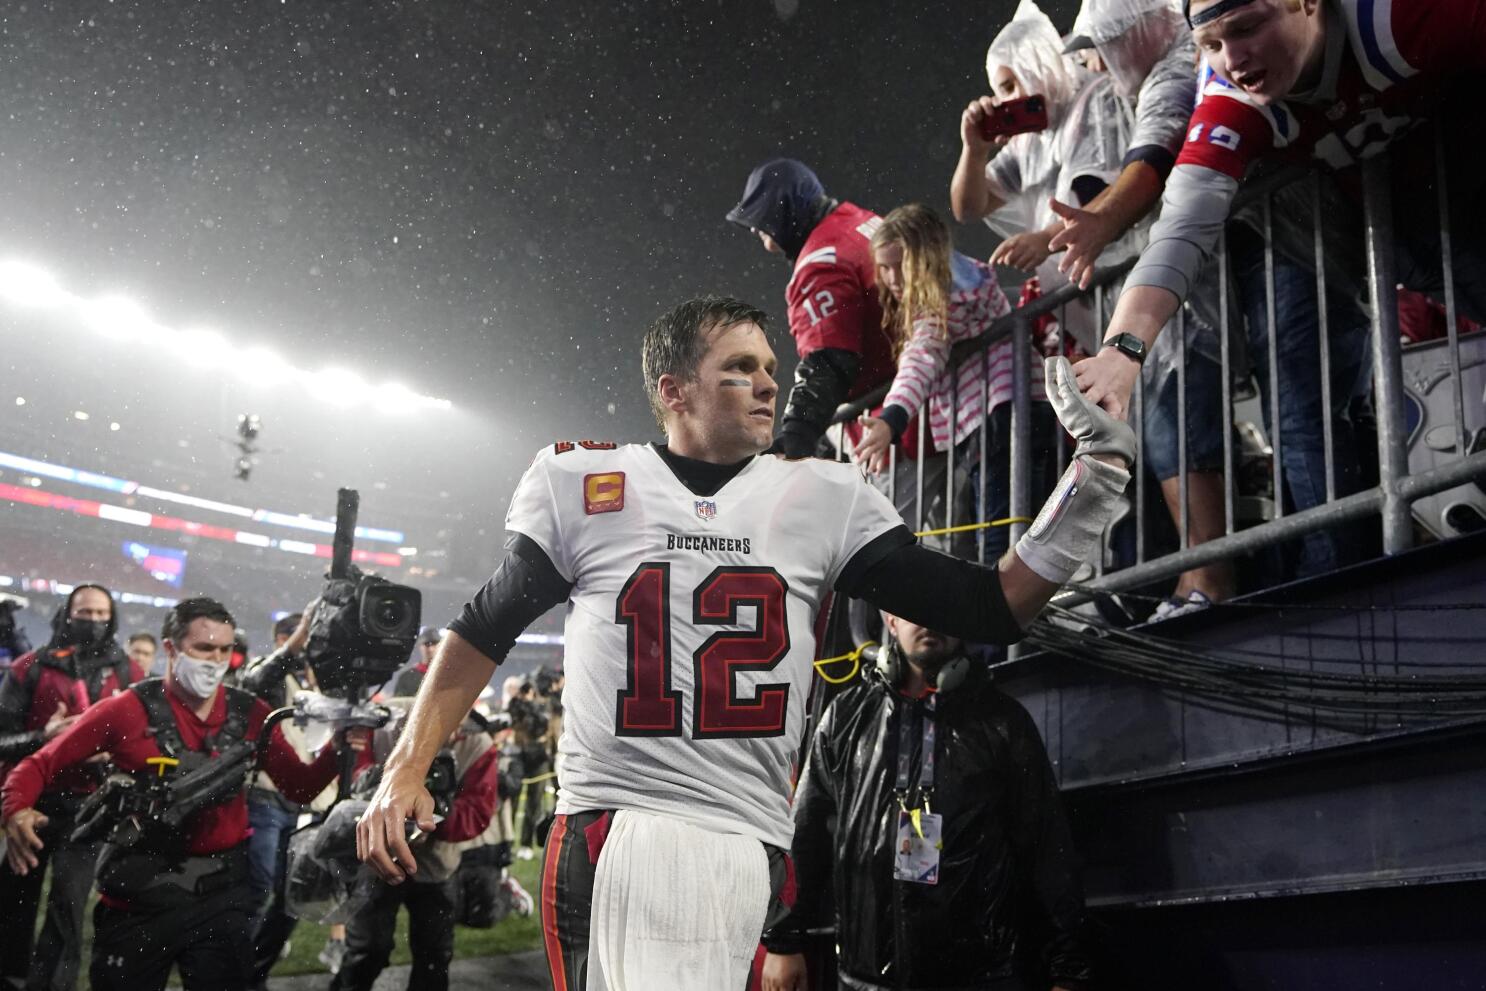 Texans' Win Over Patriots Pumps Up Sunday Night Football Ratings – Deadline